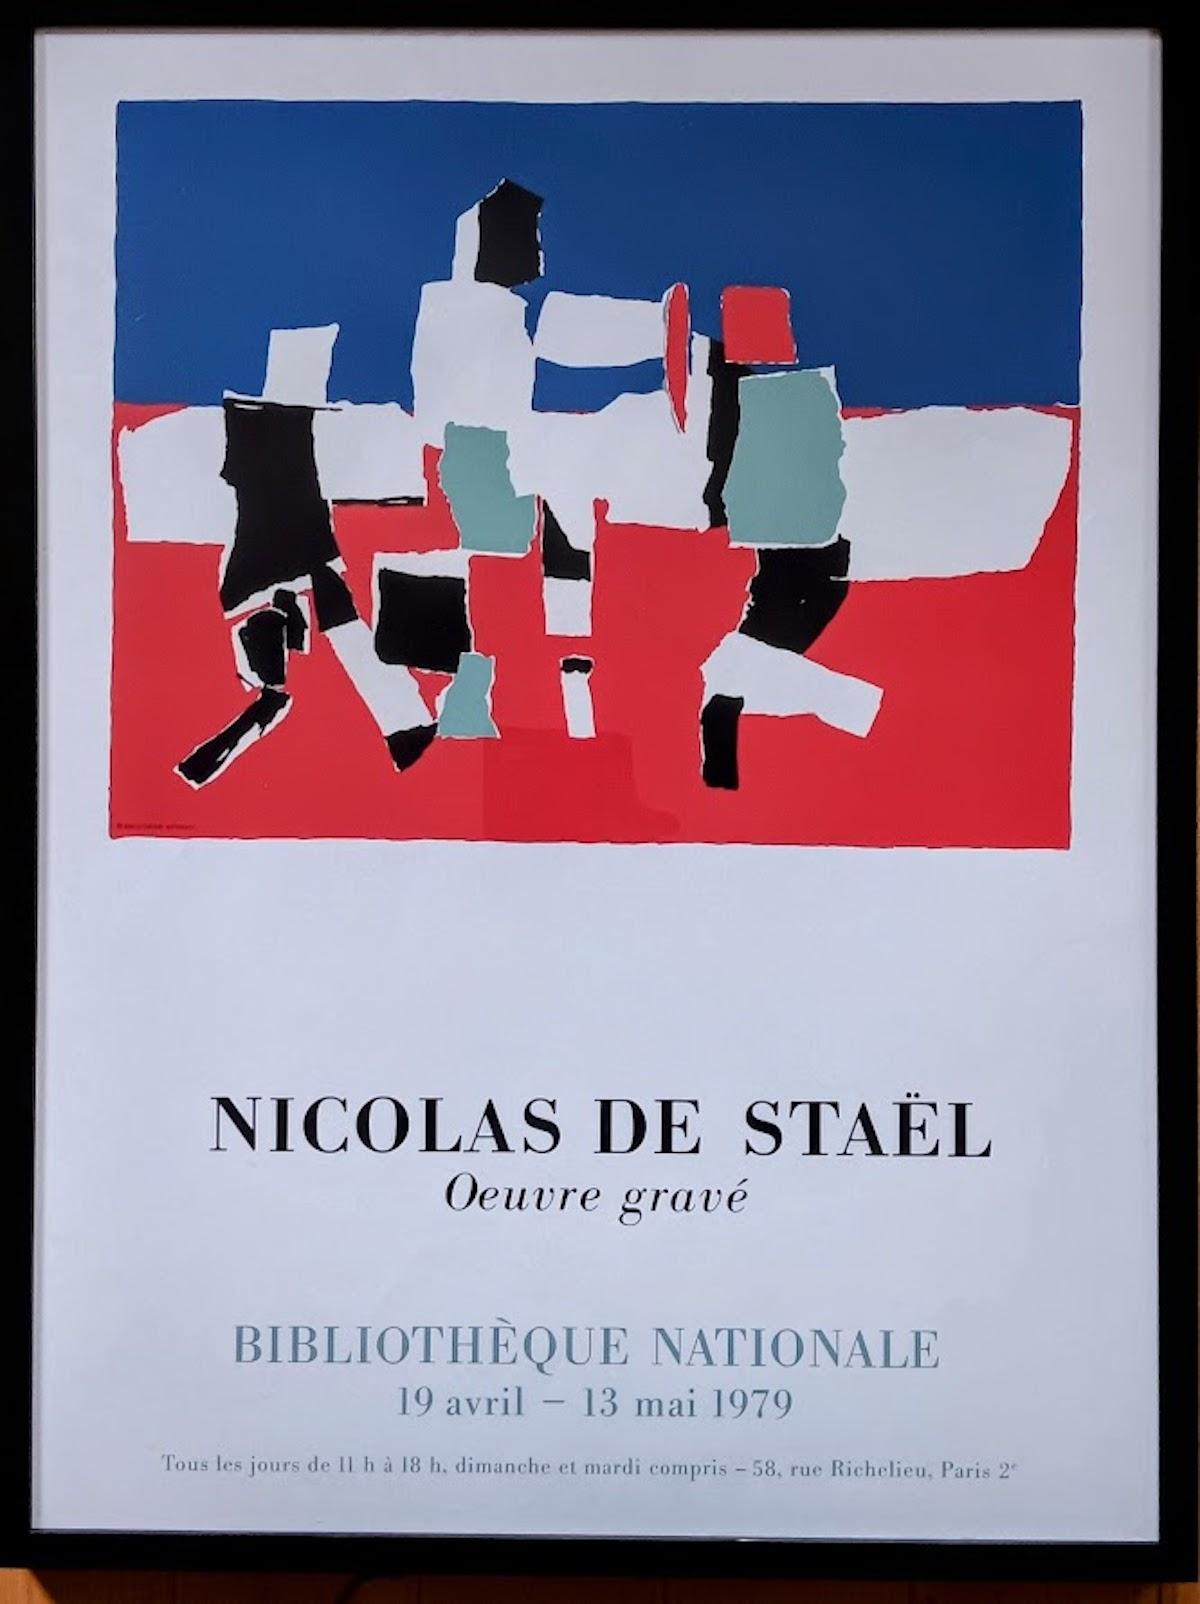  Affiche originale de Nicolas de Stael, Oeuvre Gravé, 1979 - Print de Nicolas de Stael (after)